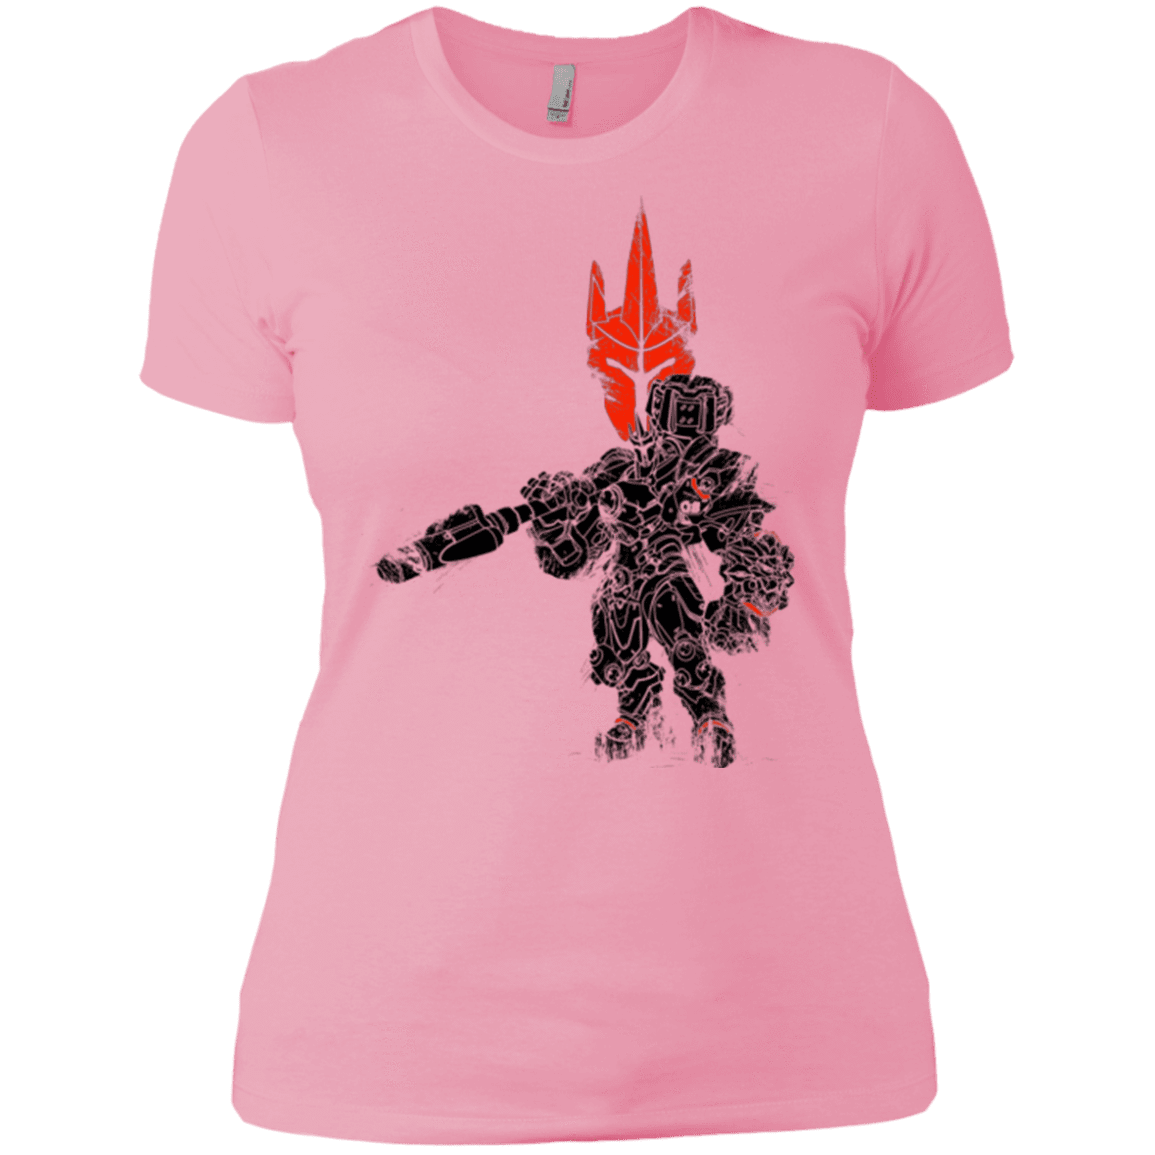 T-Shirts Light Pink / X-Small TRADITIONAL REINHARDT Women's Premium T-Shirt